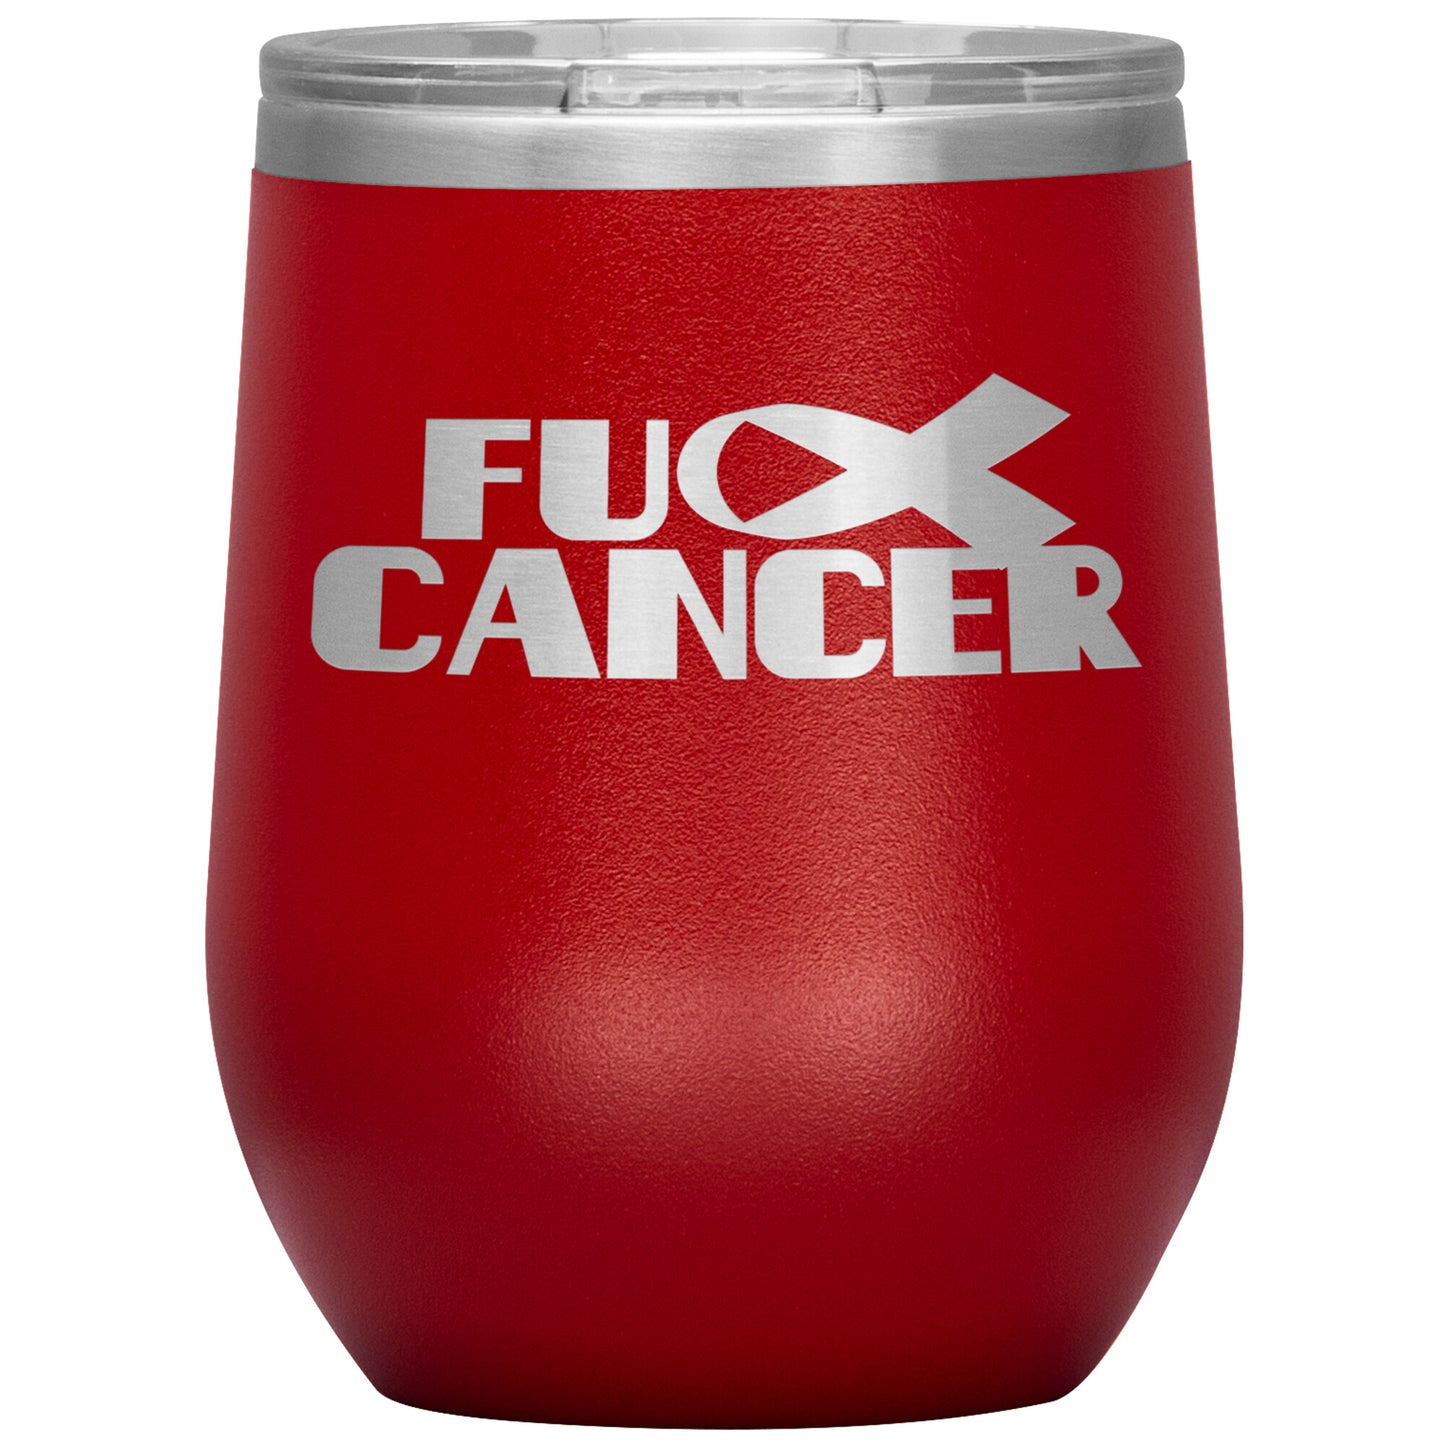 Fu** Cancer 12oz Wine Insulated Tumbler